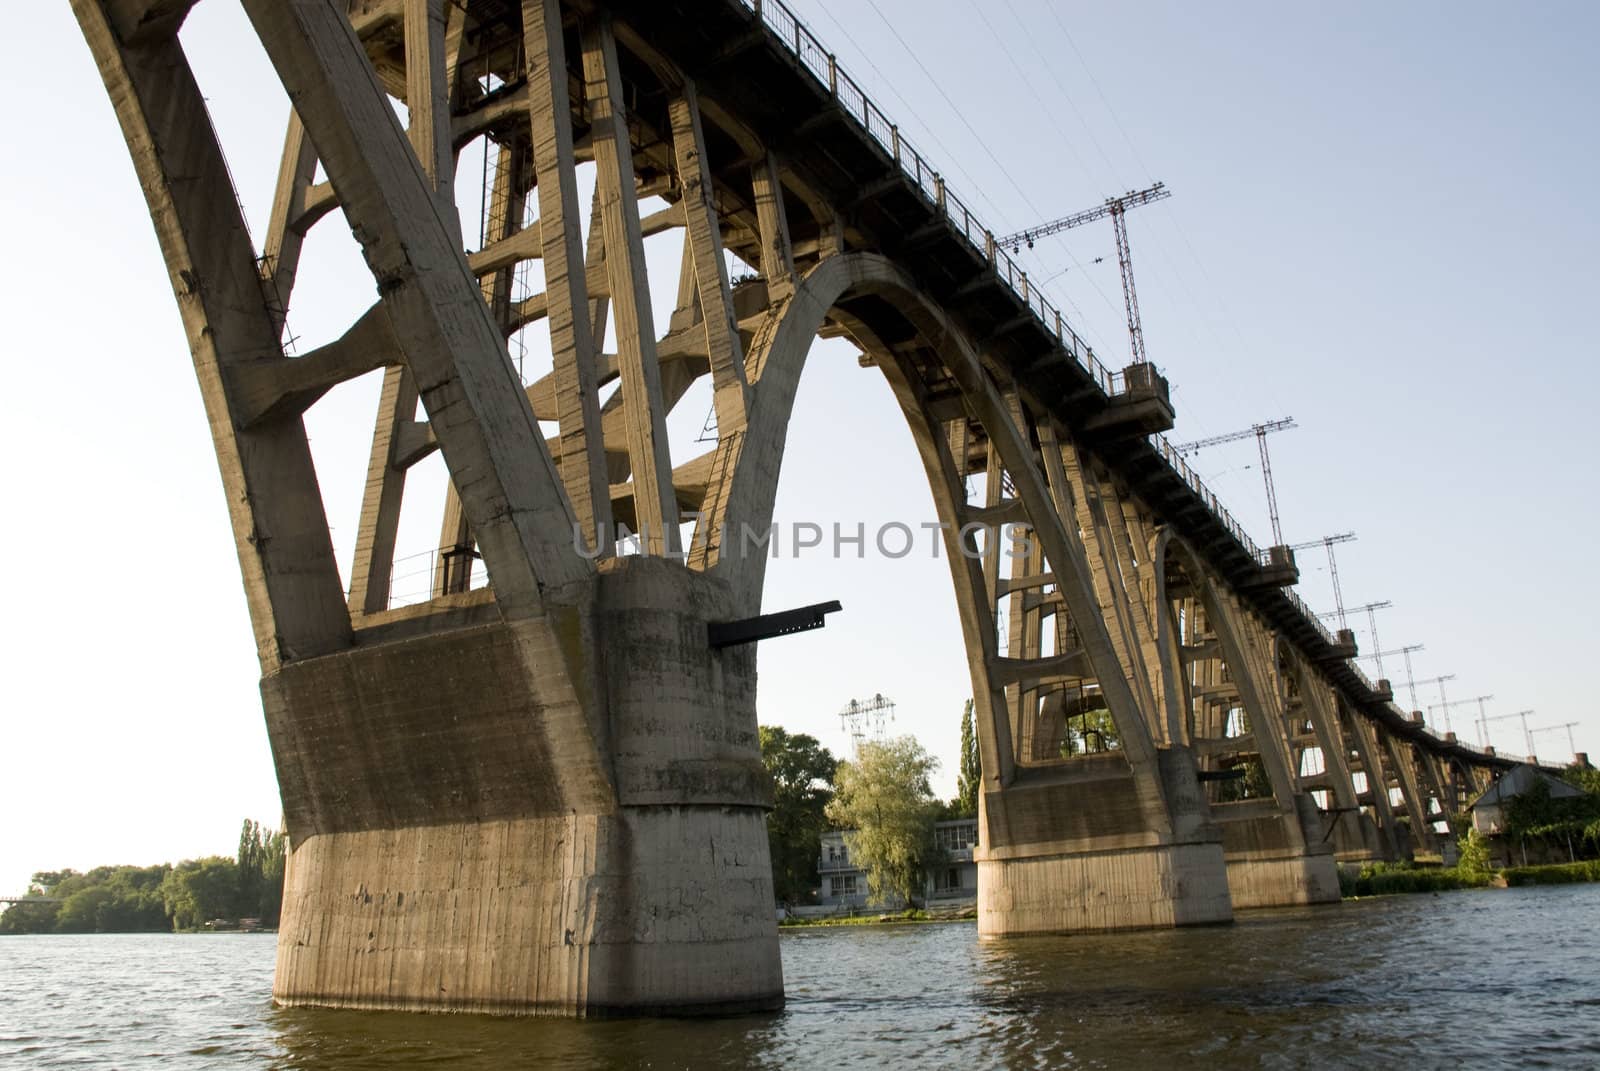 railroad bridge by kulykovych